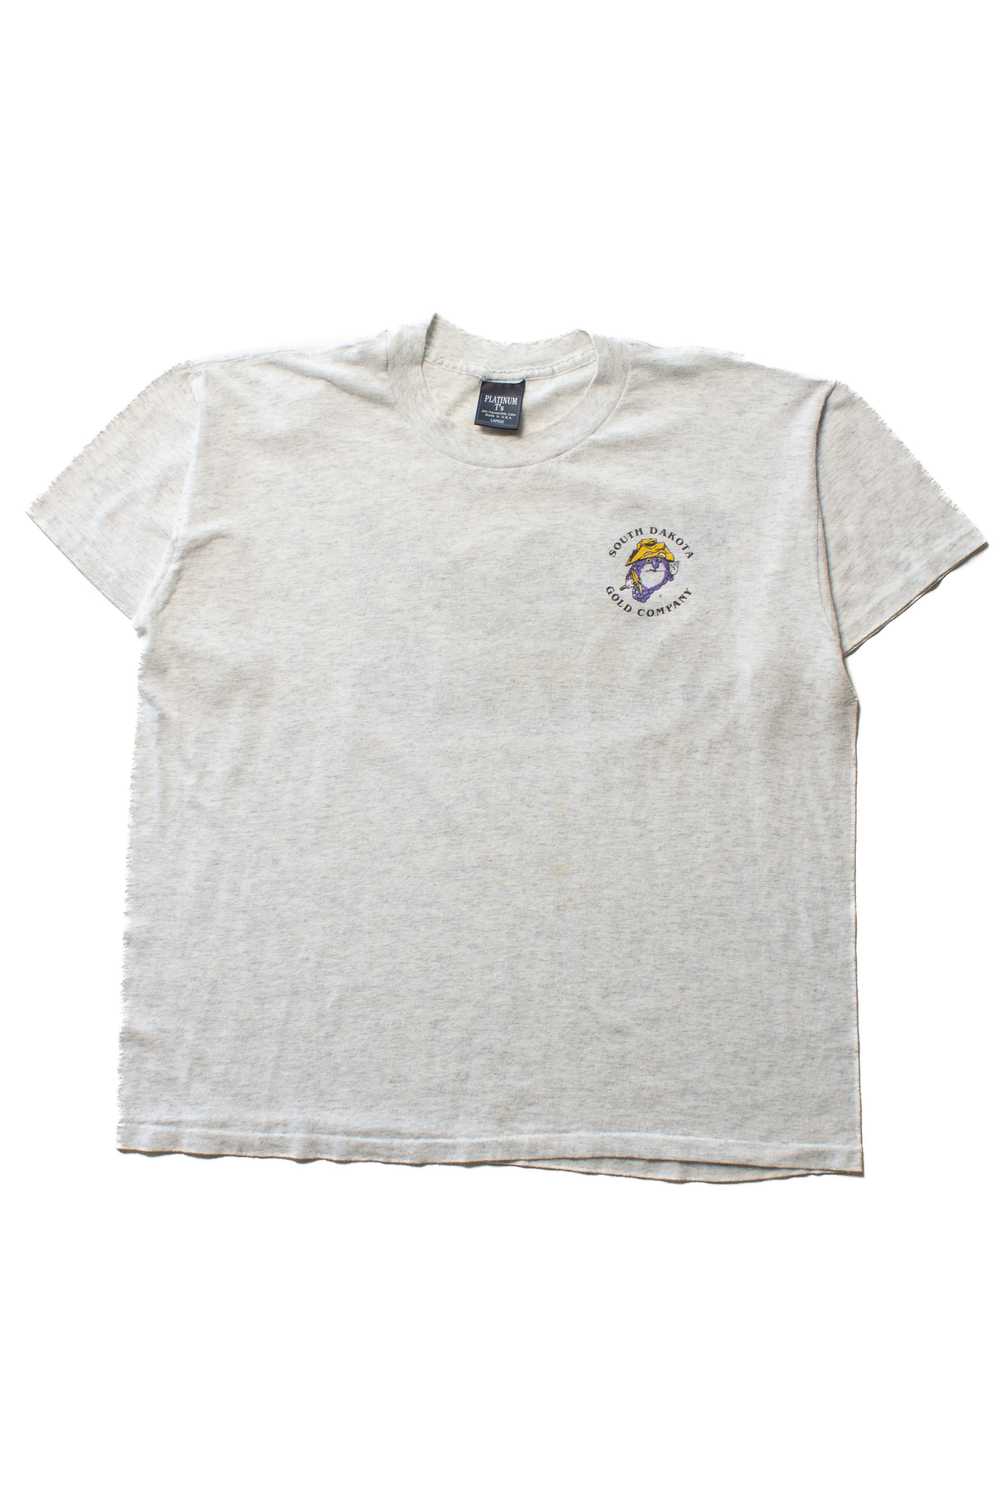 Vintage South Dakota Gold Company T-Shirt (1990s) - image 1